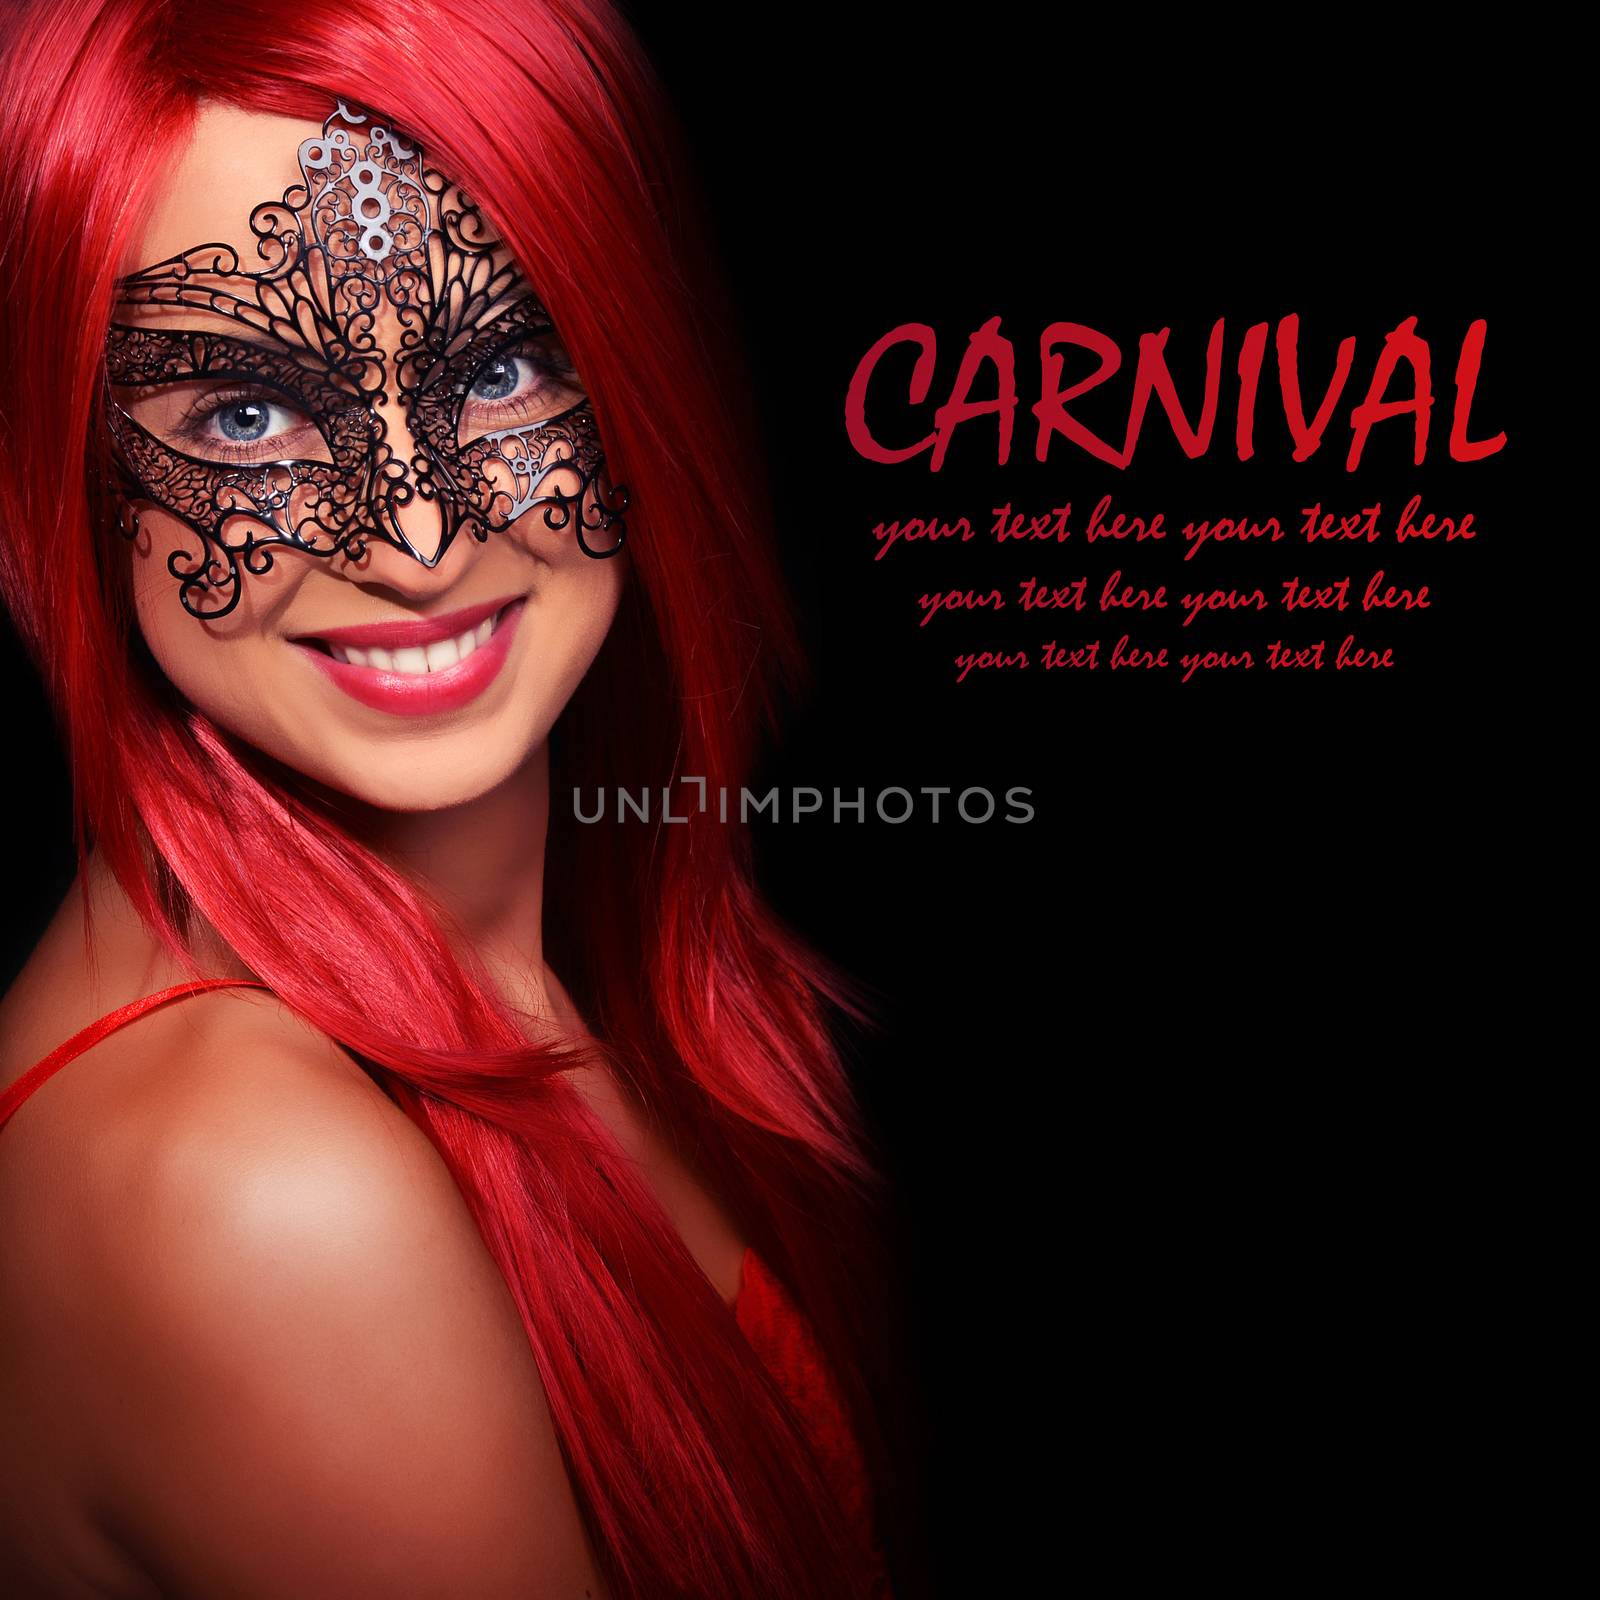 Carnival girl by kwasny221